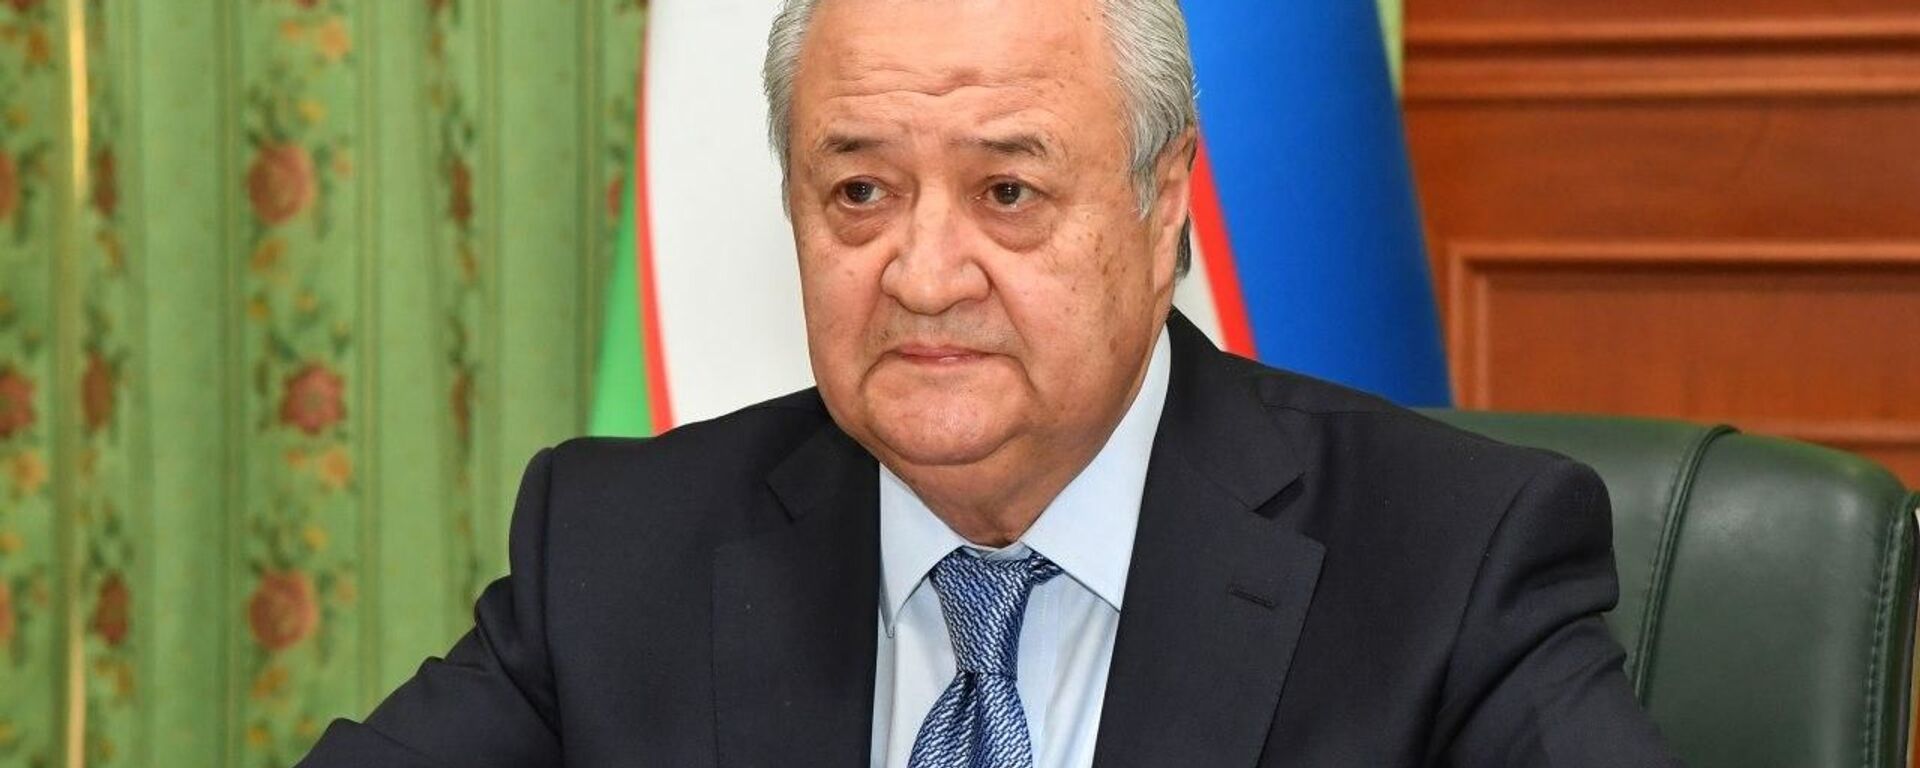 Министр иностранных дел Узбекистана Абдулазиз Камилов  - Sputnik Узбекистан, 1920, 21.06.2021